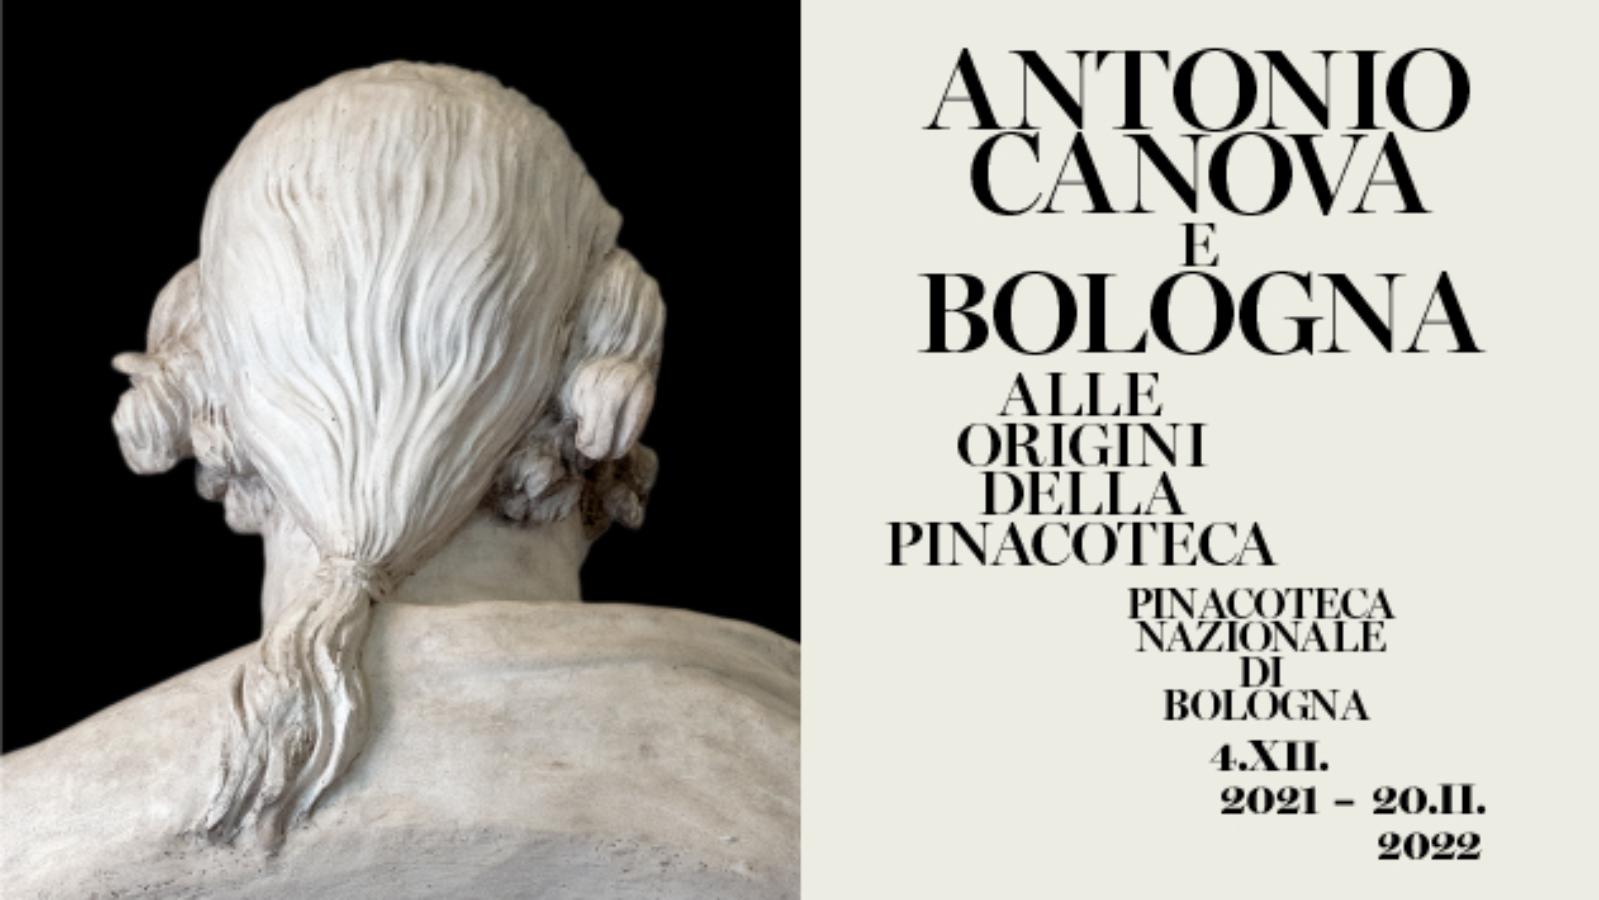 Antonio Canova and Bologna. From the origins of National Gallery